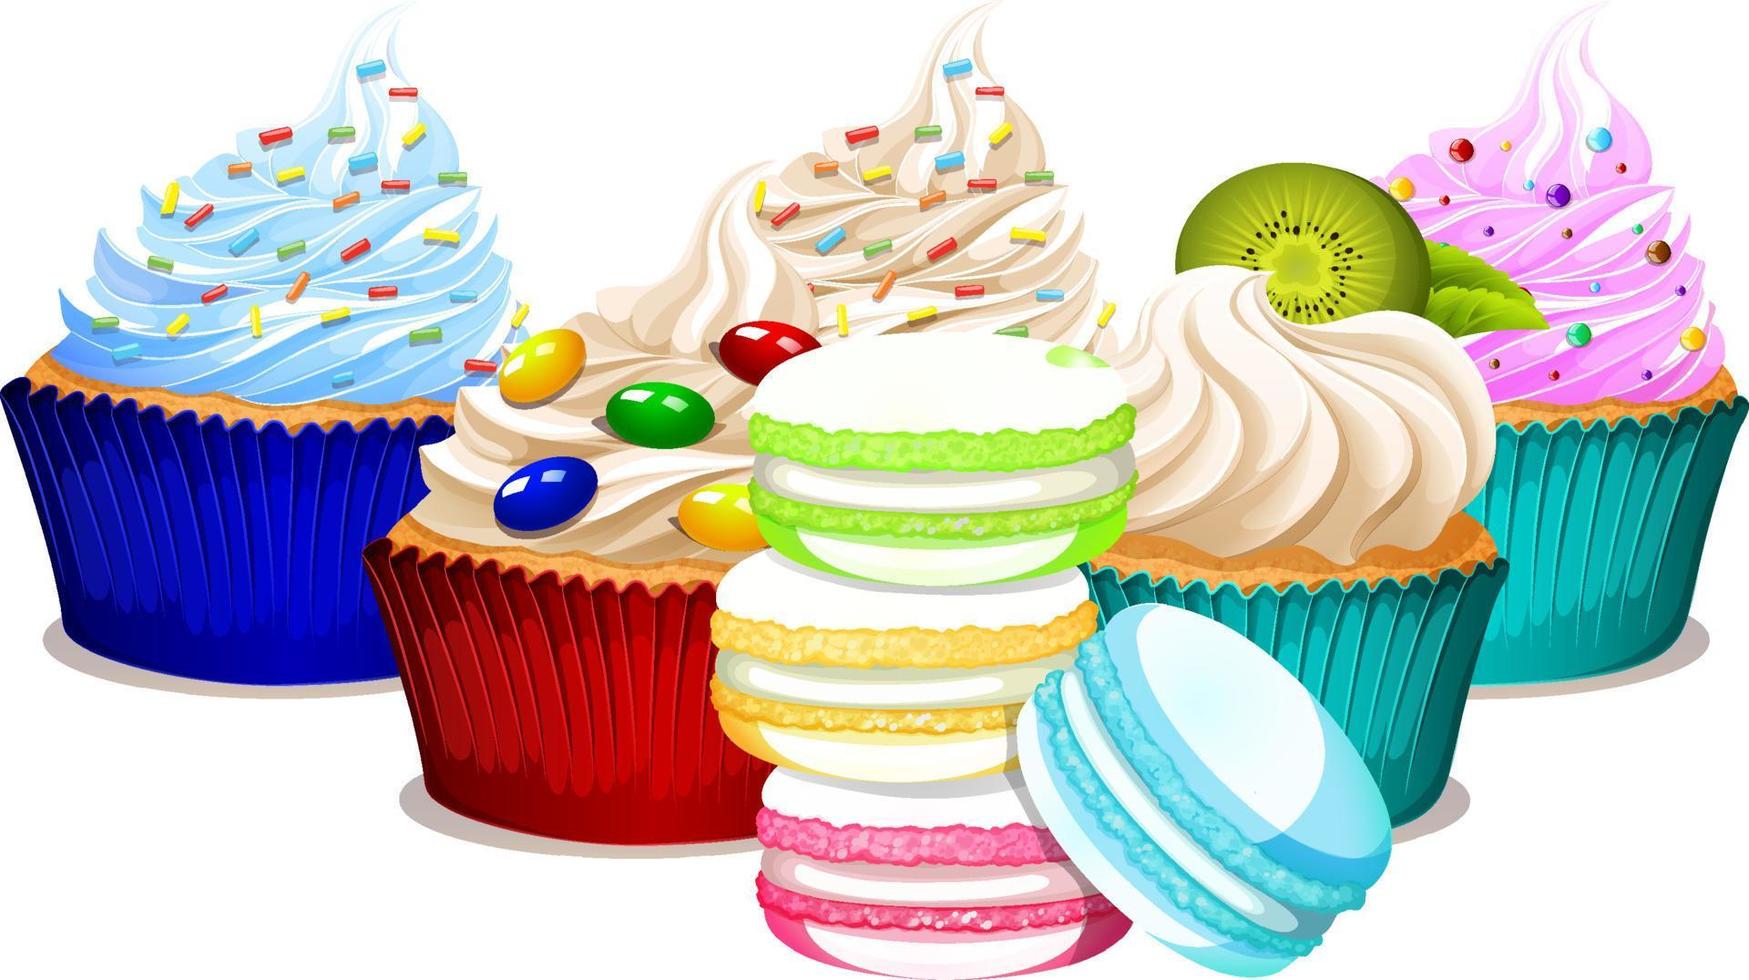 Delicious cupcakes and macaroon cartoon set vector